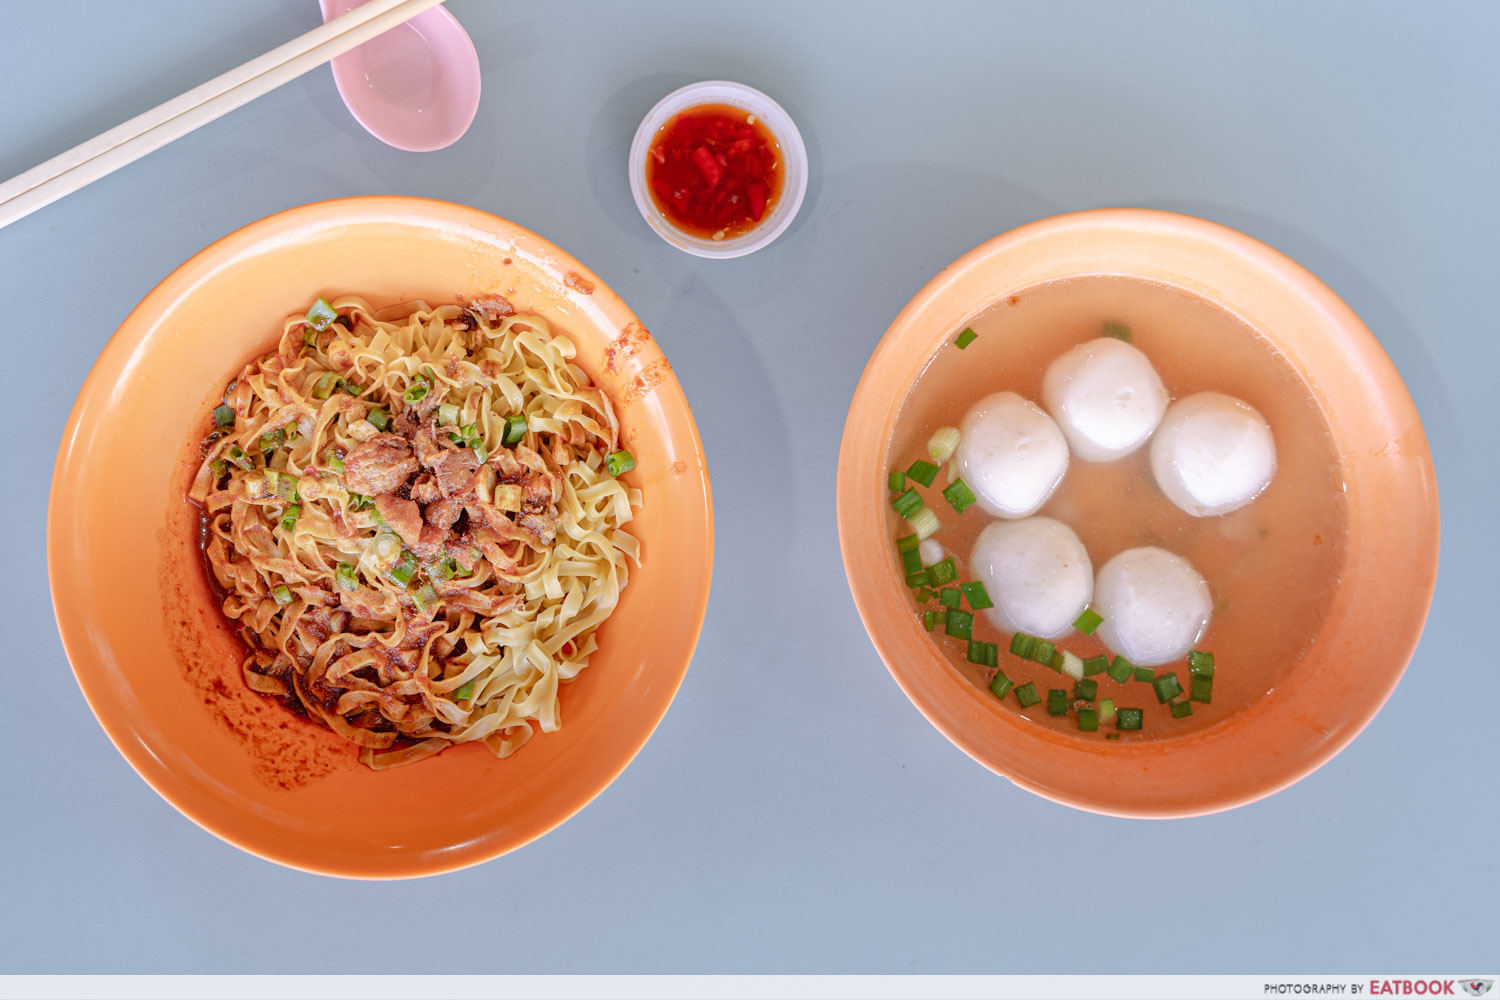 xin lu fishball noodle - mee pok dry chilli